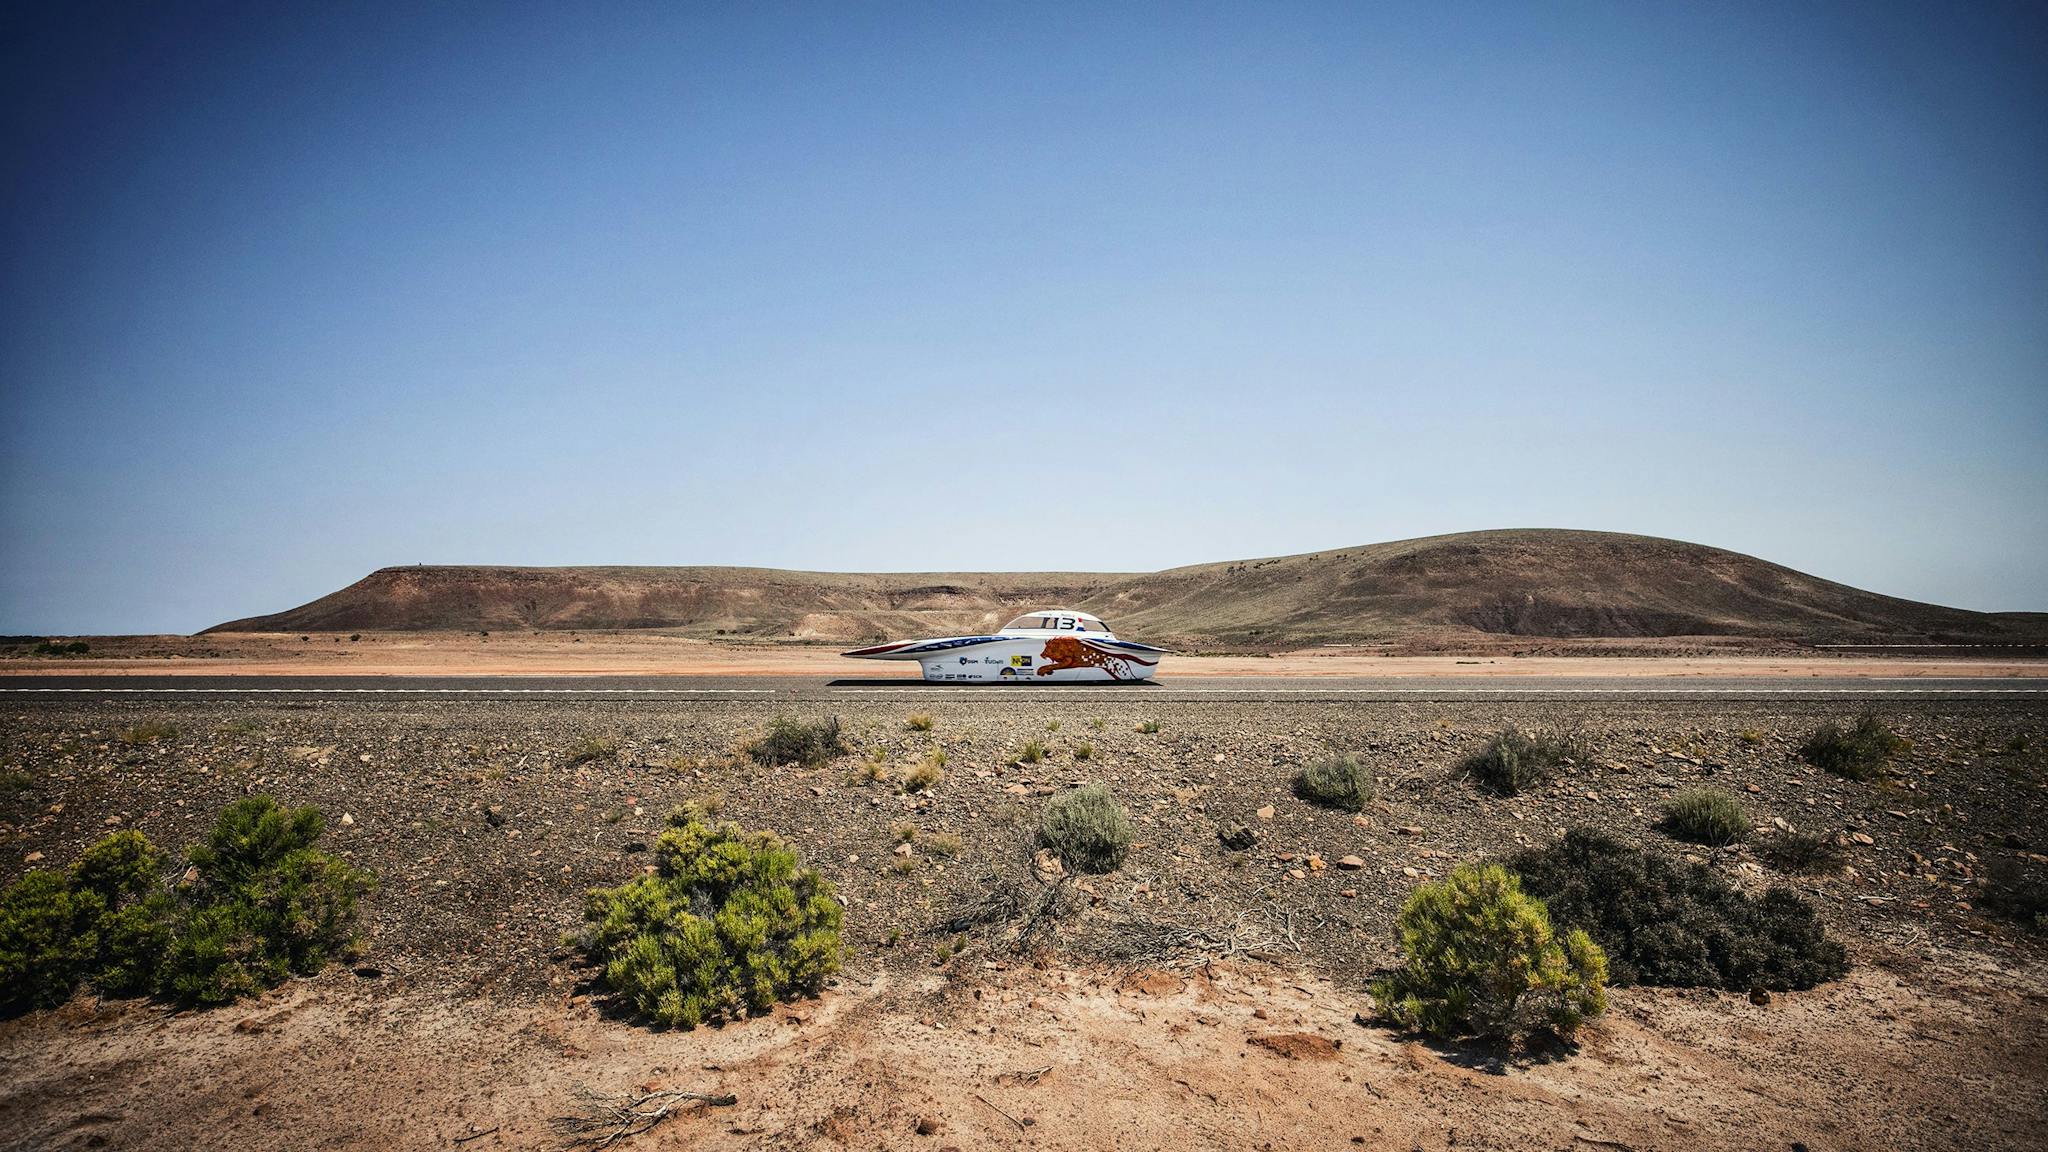 Nuna 8 driving through the Australian desert